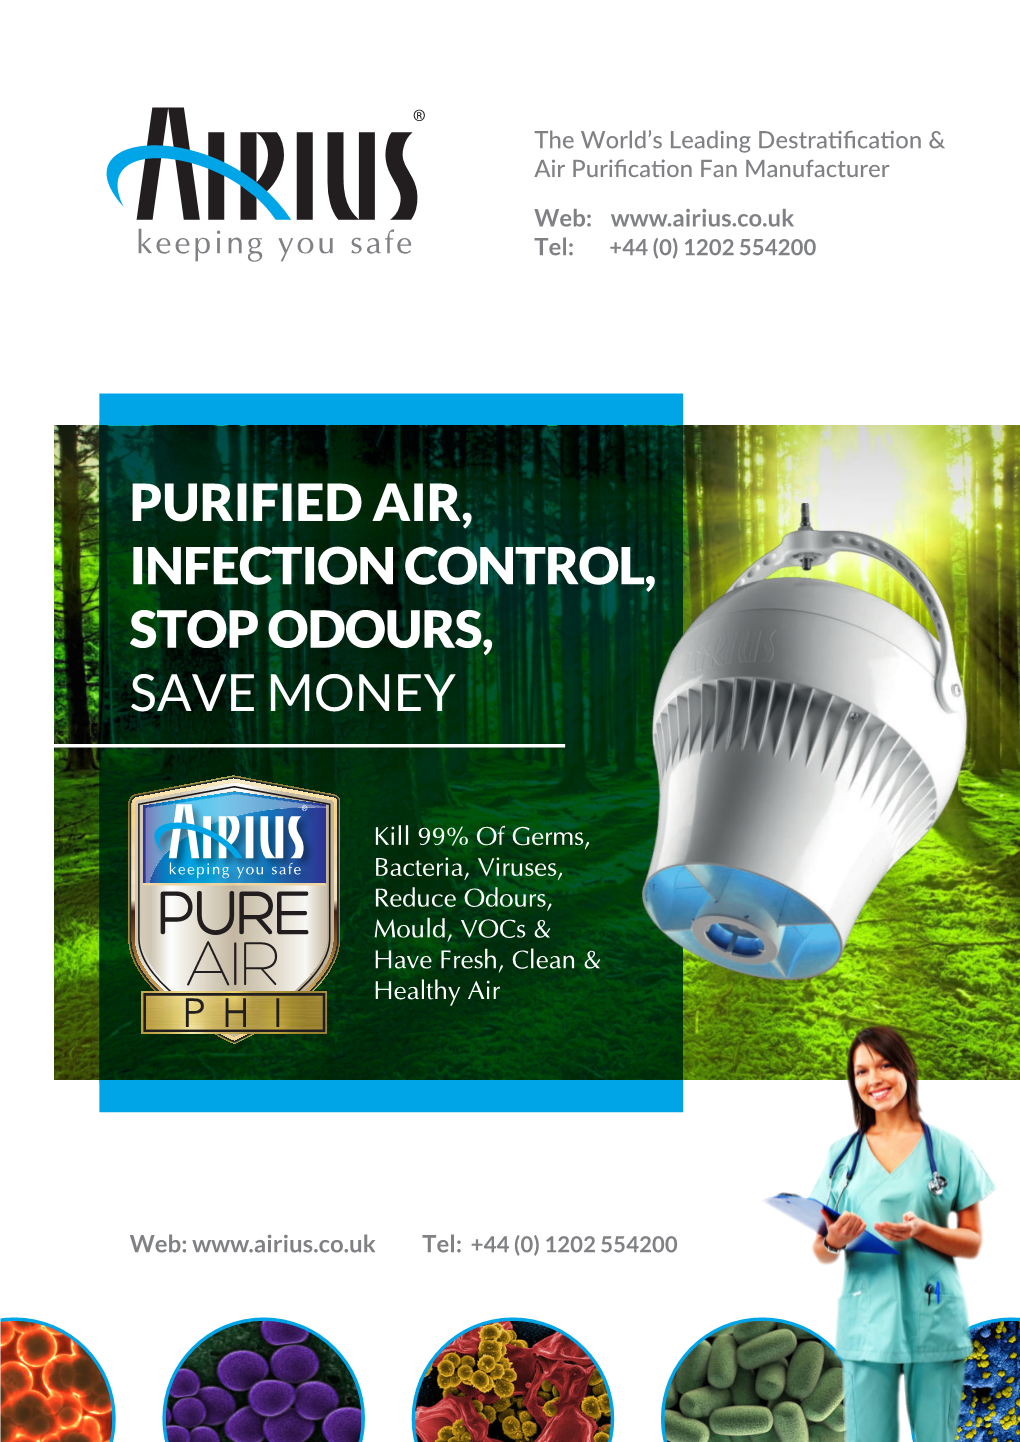 Airius Pureair PHI? AIRIUS Clean Your Air & Eliminate Odours